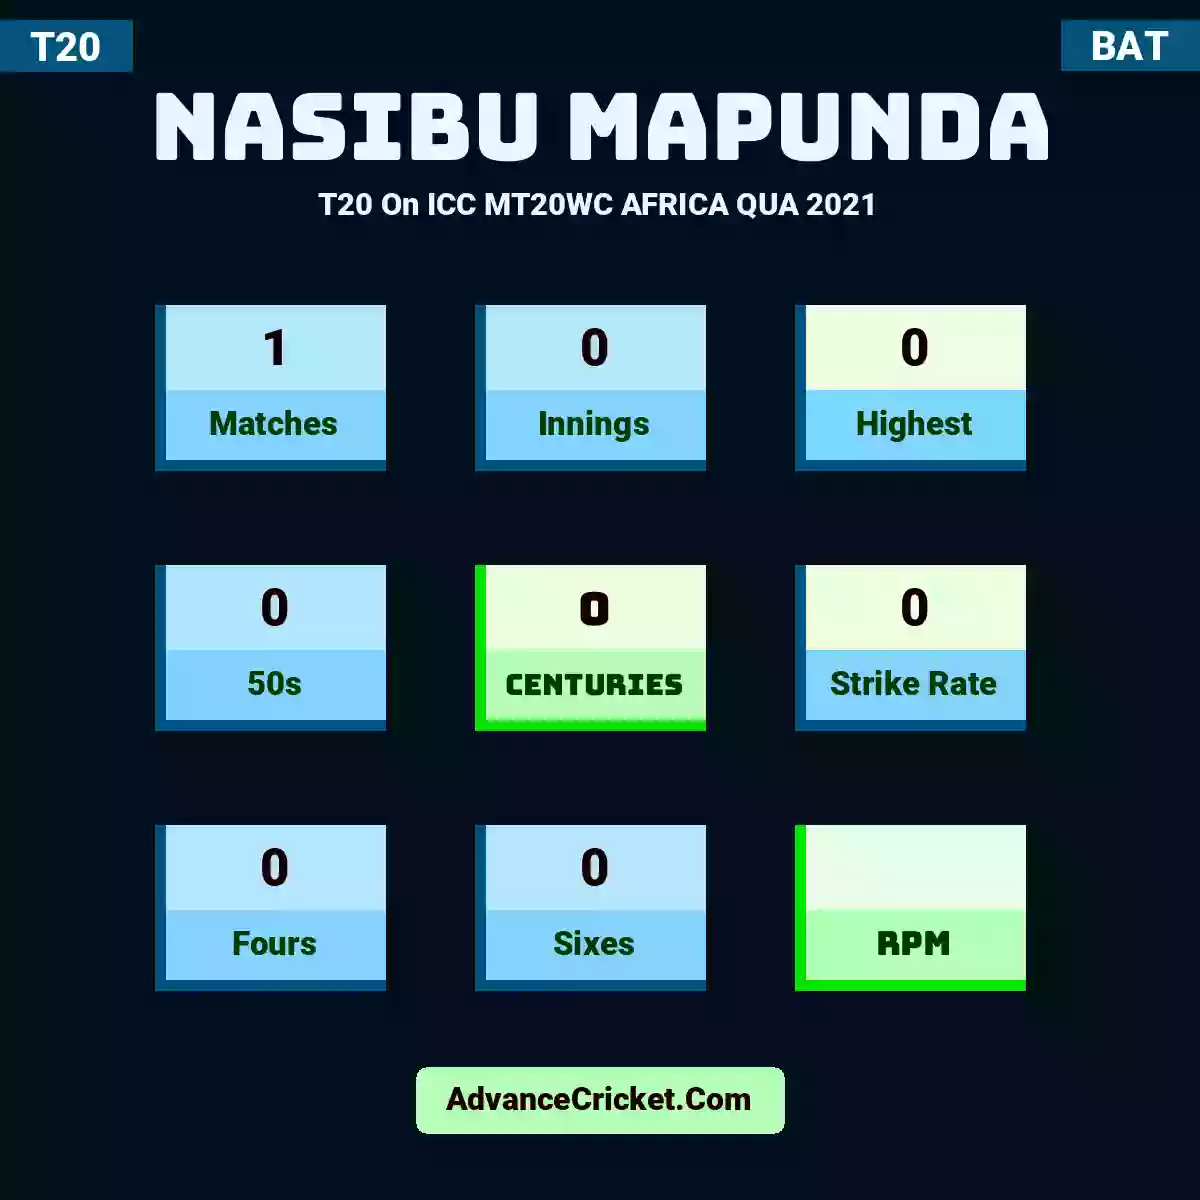 Nasibu Mapunda T20  On ICC MT20WC AFRICA QUA 2021, Nasibu Mapunda played 1 matches, scored 0 runs as highest, 0 half-centuries, and 0 centuries, with a strike rate of 0. N.Mapunda hit 0 fours and 0 sixes.